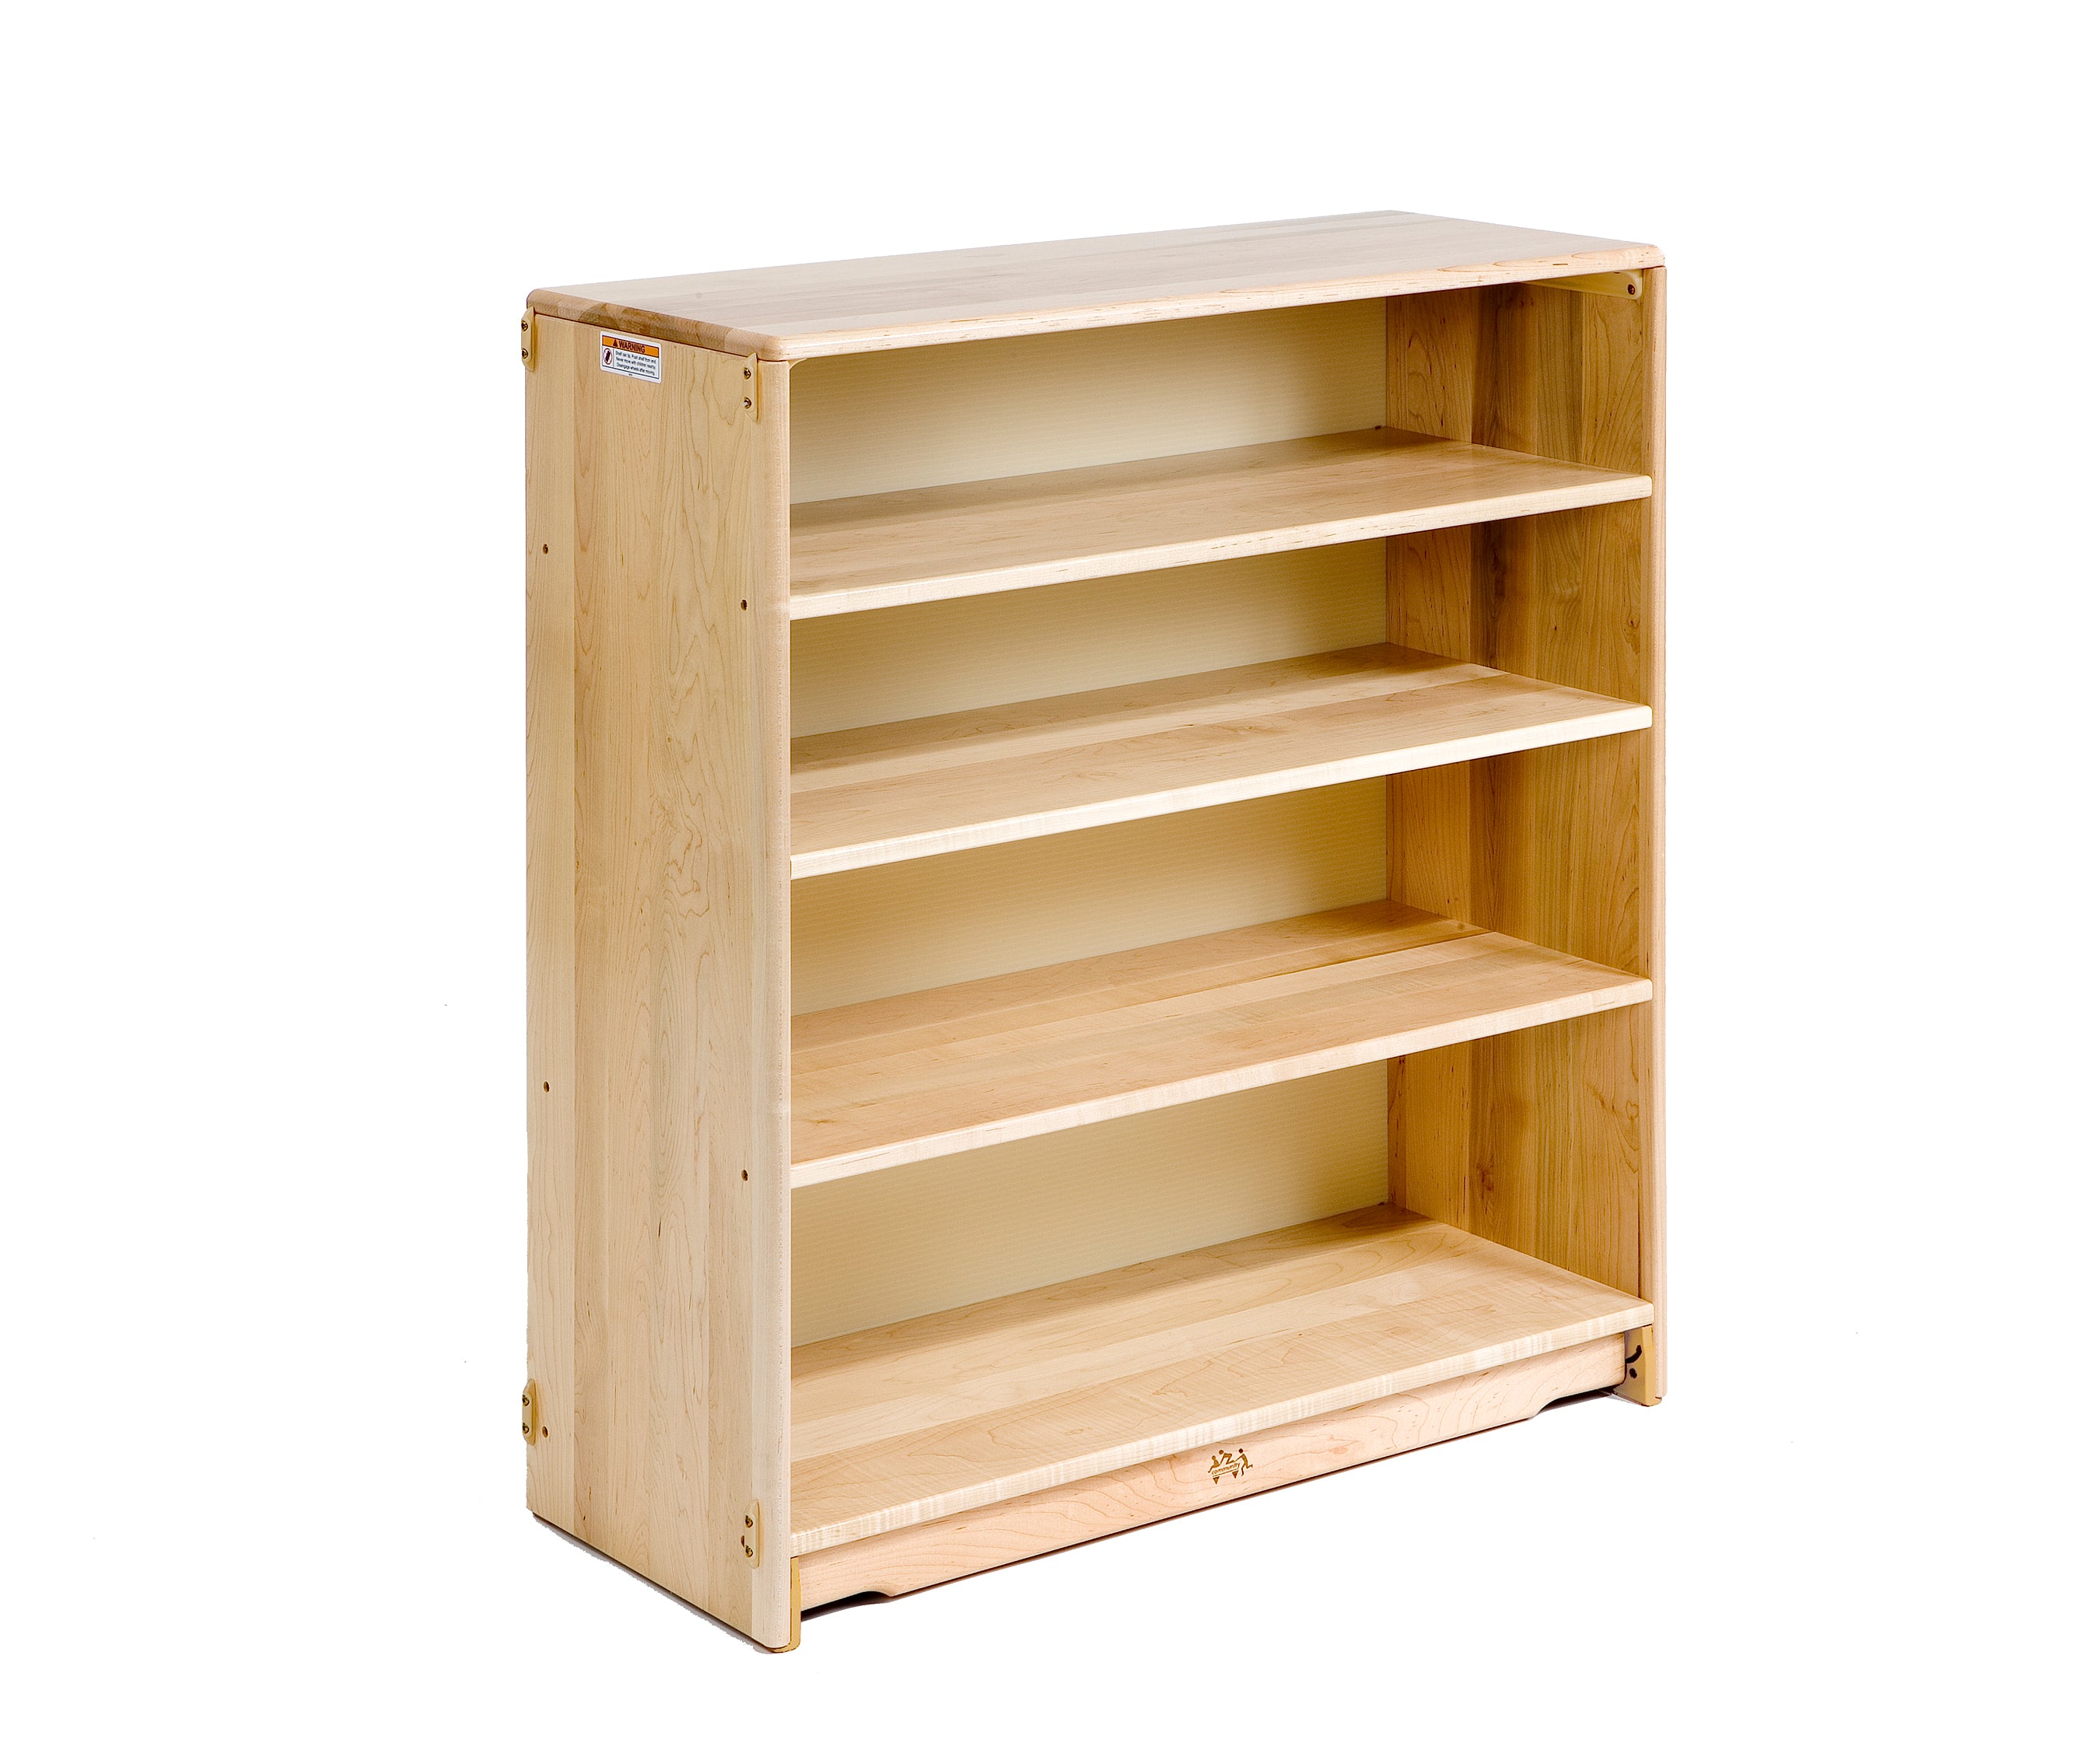 Fixed Shelf 3' x 40" by Community Playthings - louisekool